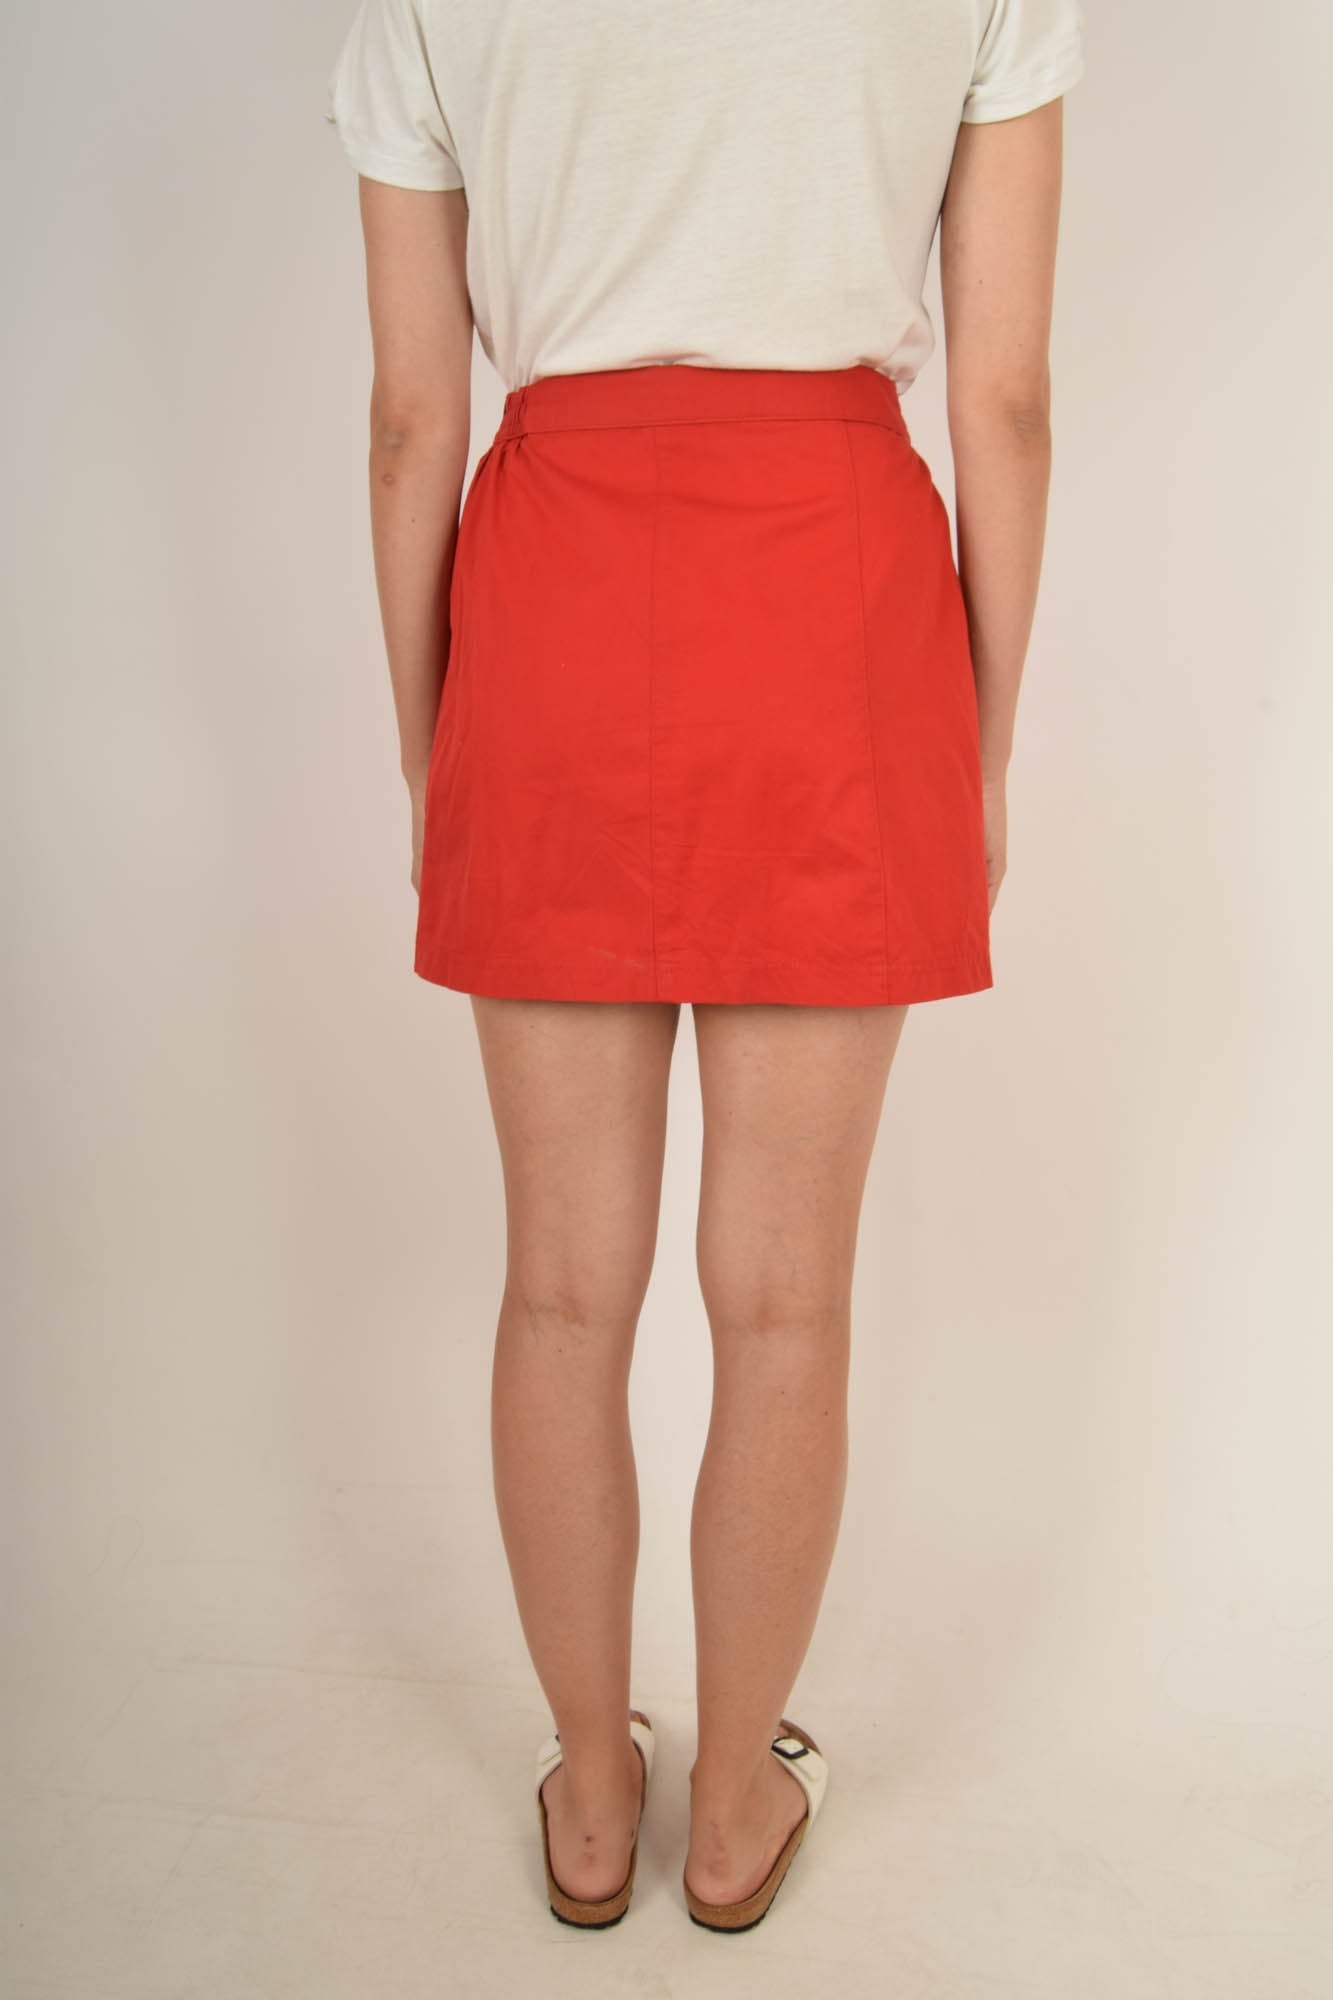 Vintage Reebok Tennis Skirt 90's Size L Red